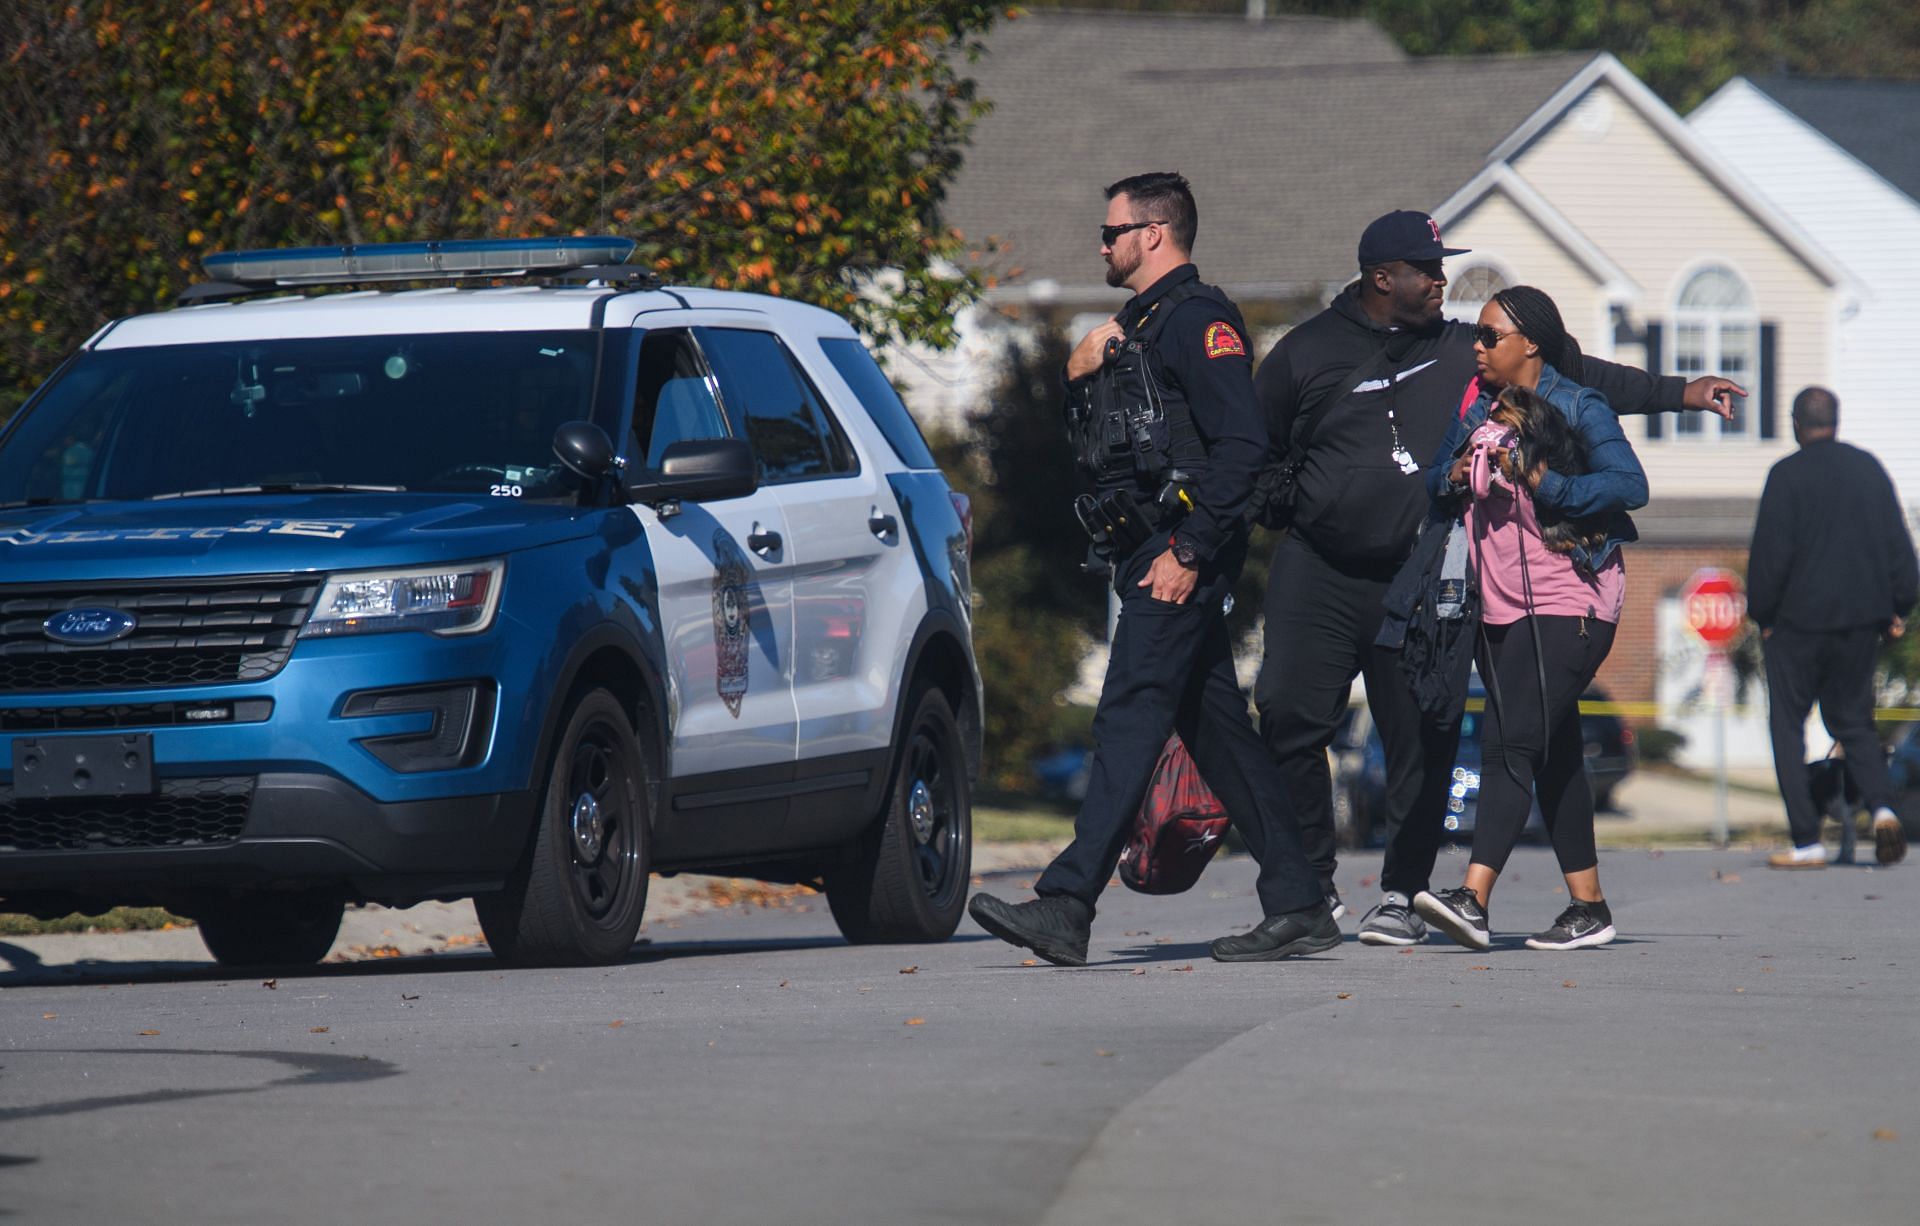 Shooting Leaves 5 Dead In Suburban Neighborhood Of Raleigh, North Carolina